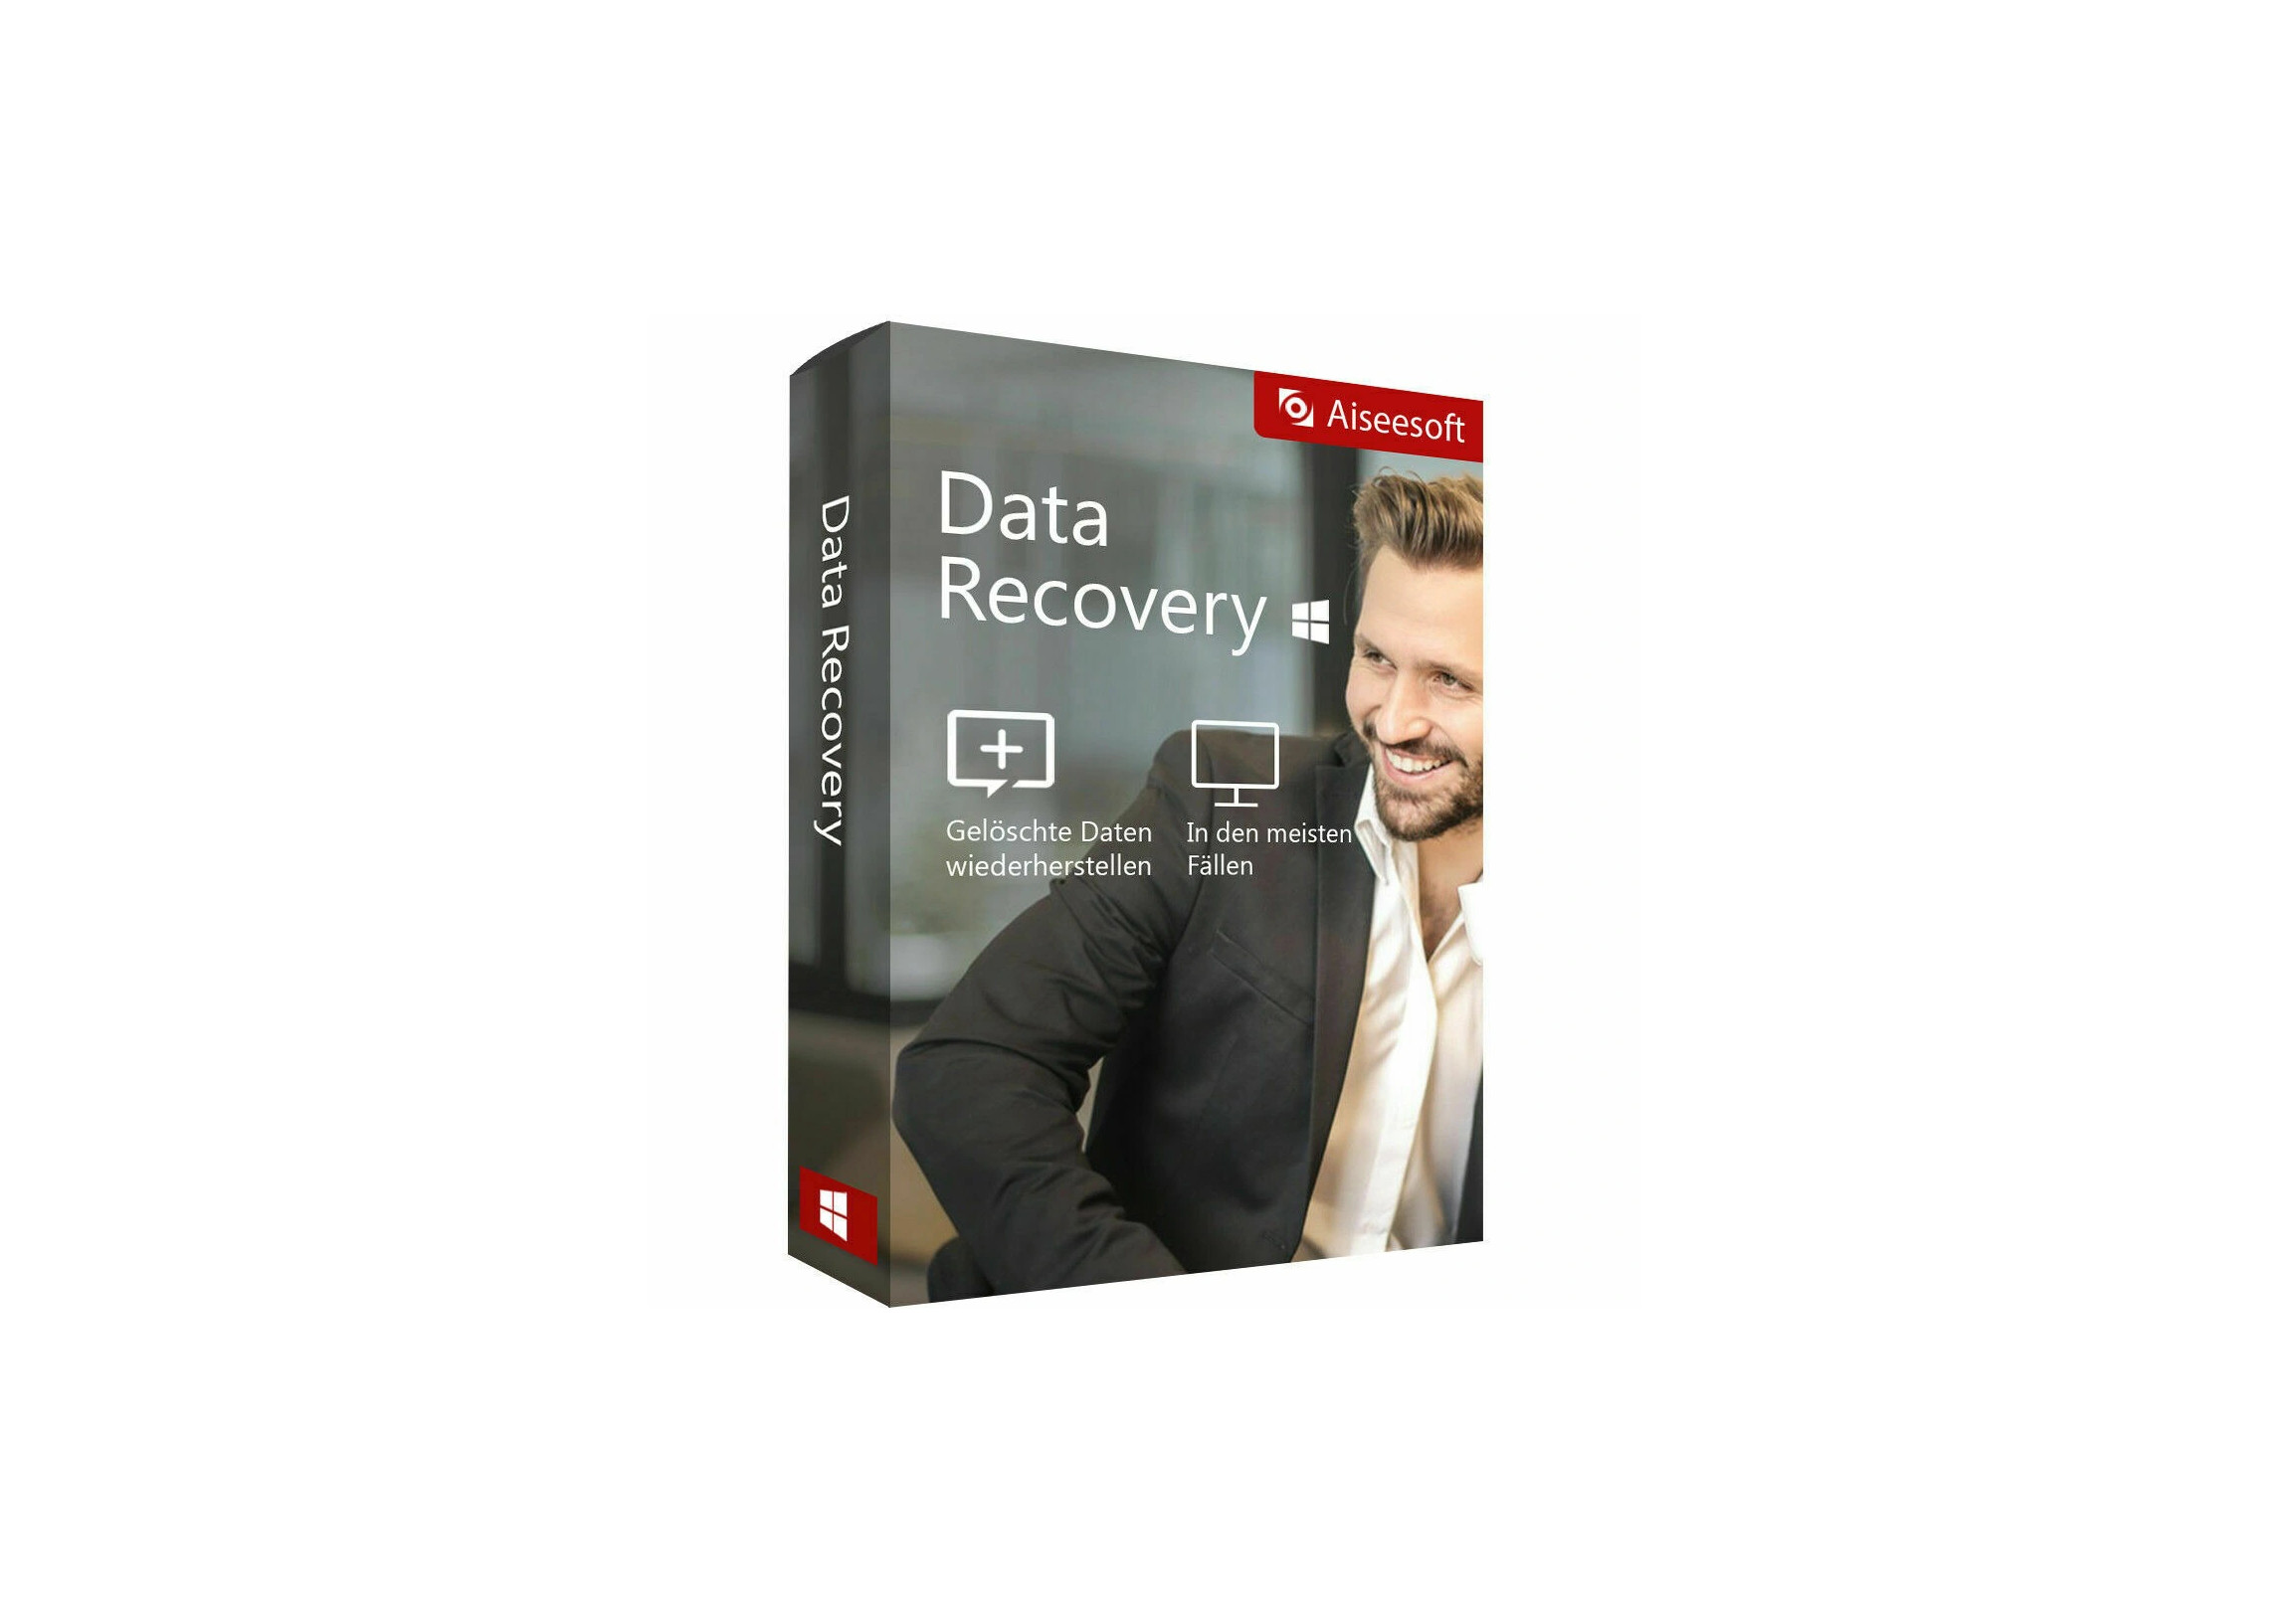 Aiseesoft Data Recovery Key (1 Year / 1 PC) 2.25 usd